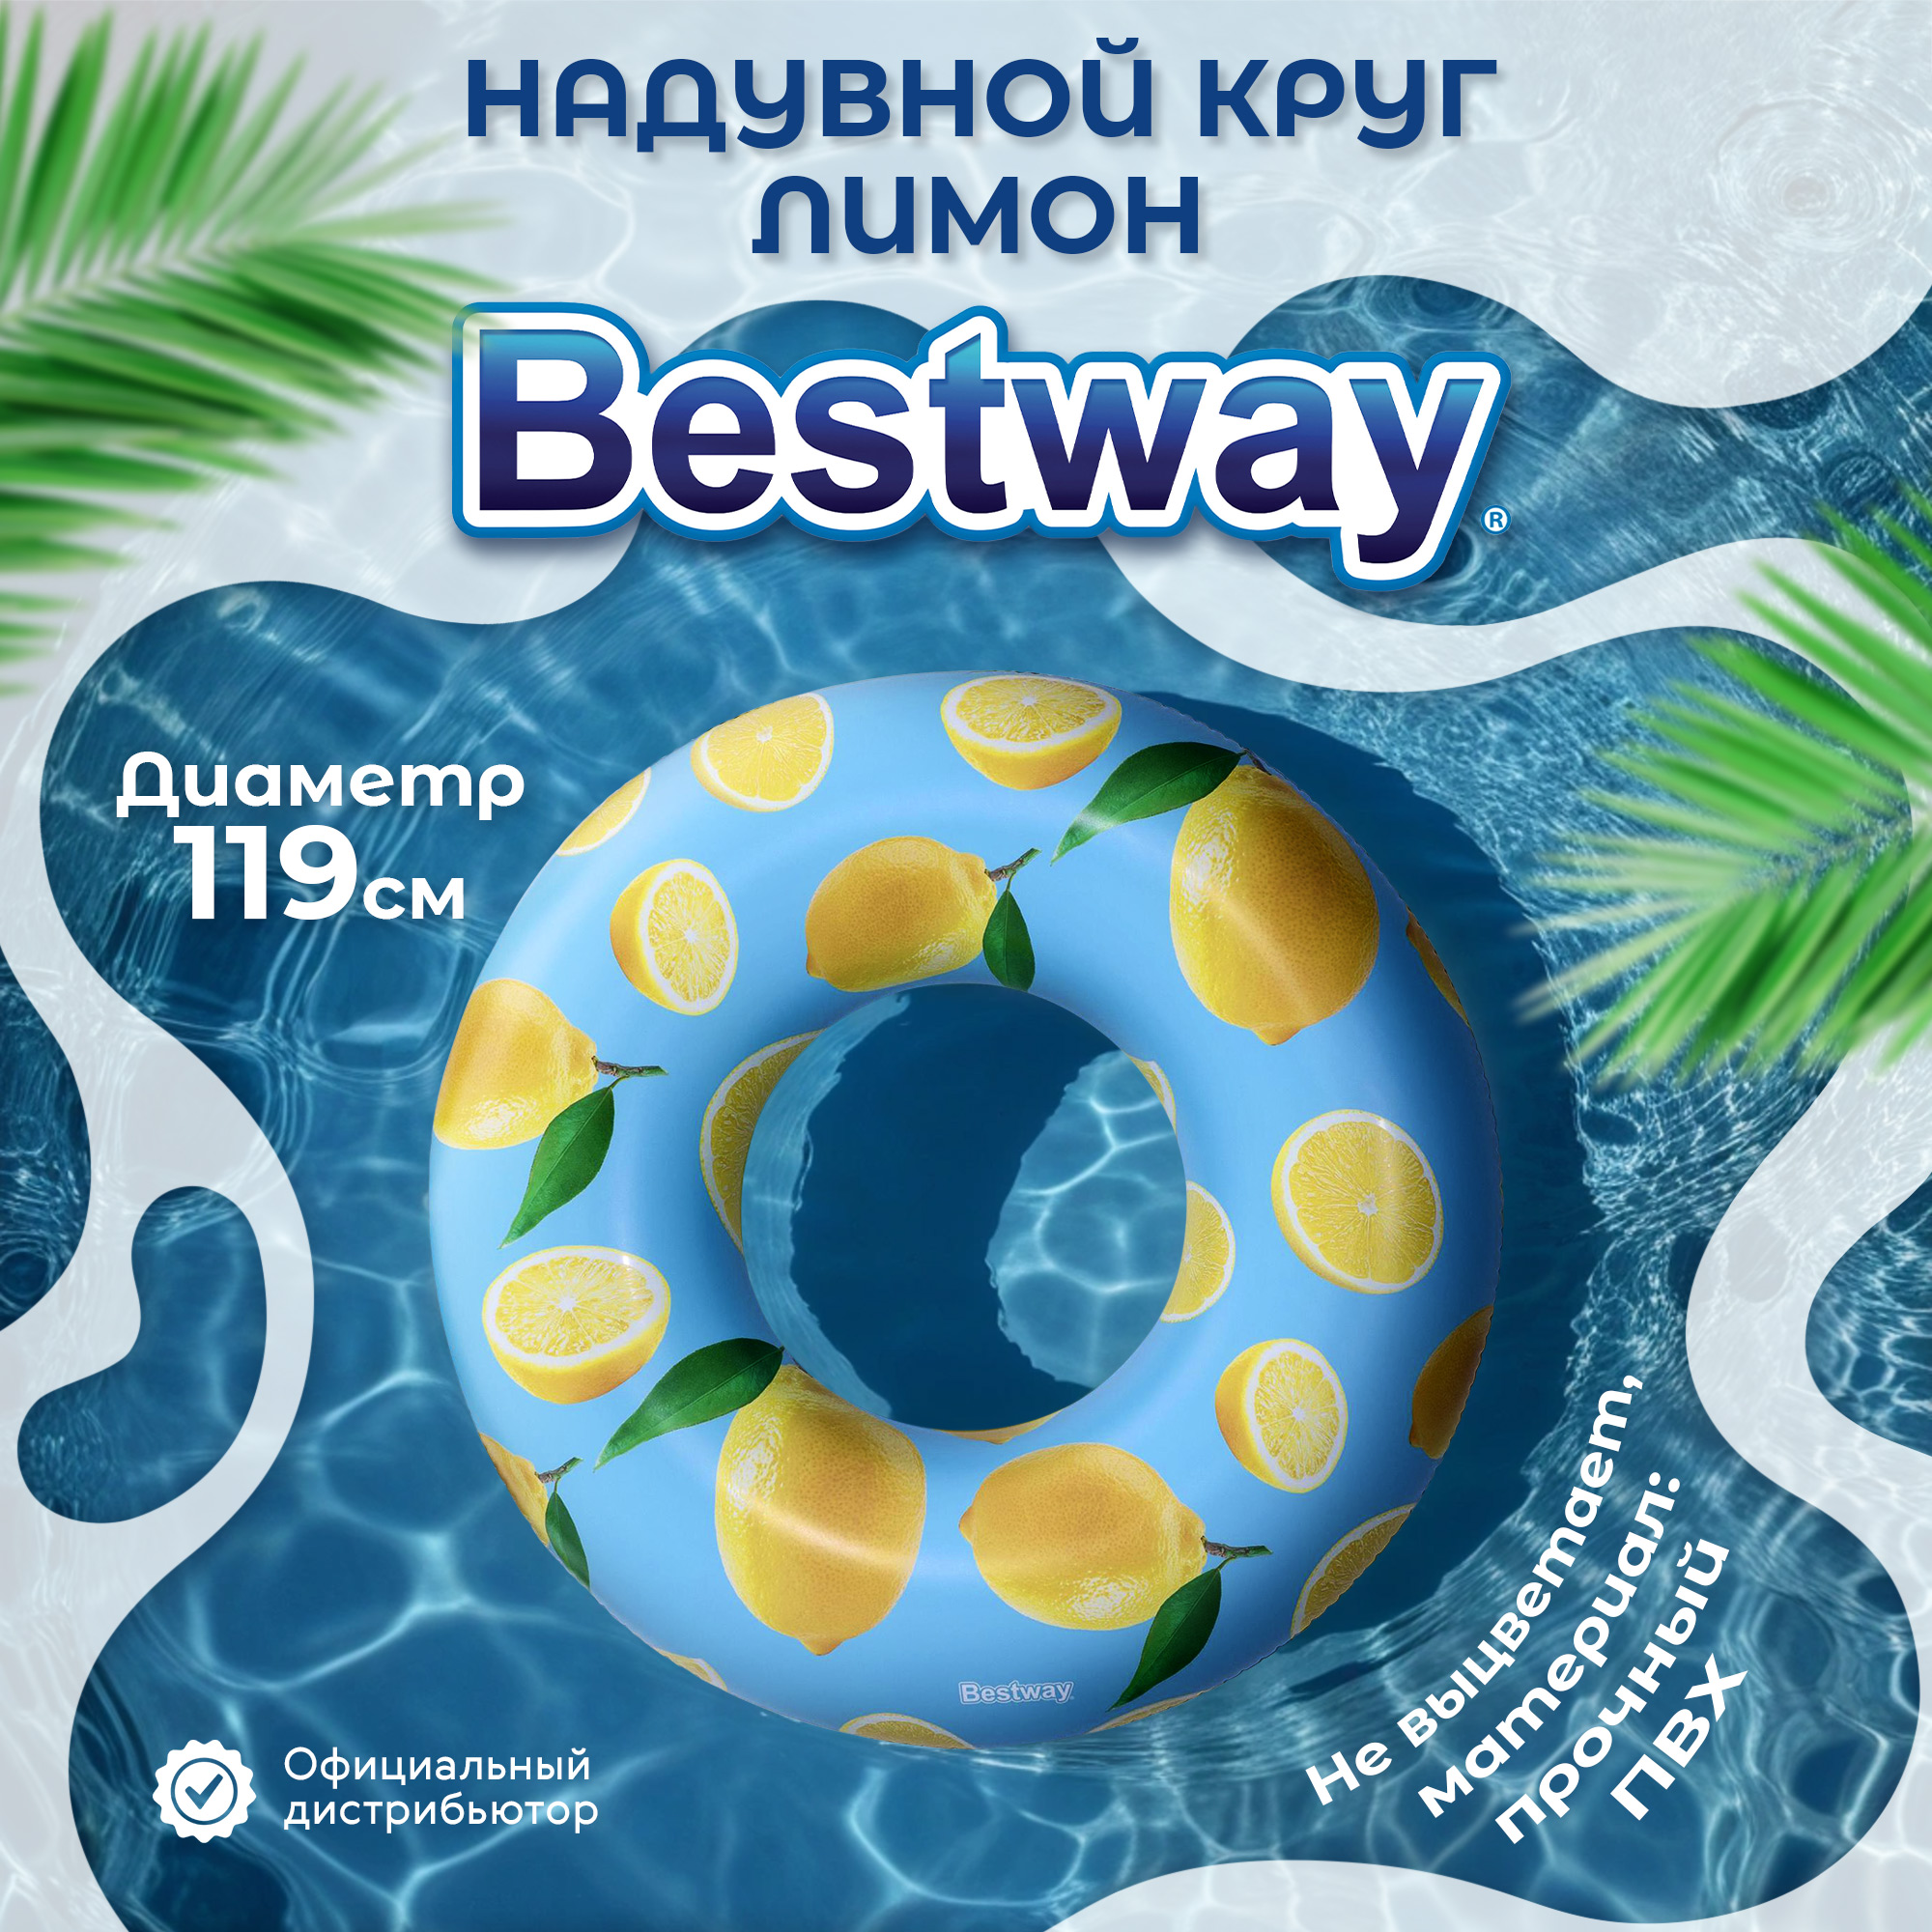 Круг для плавания Bestway лимон 119 см, цвет мультиколор - фото 2